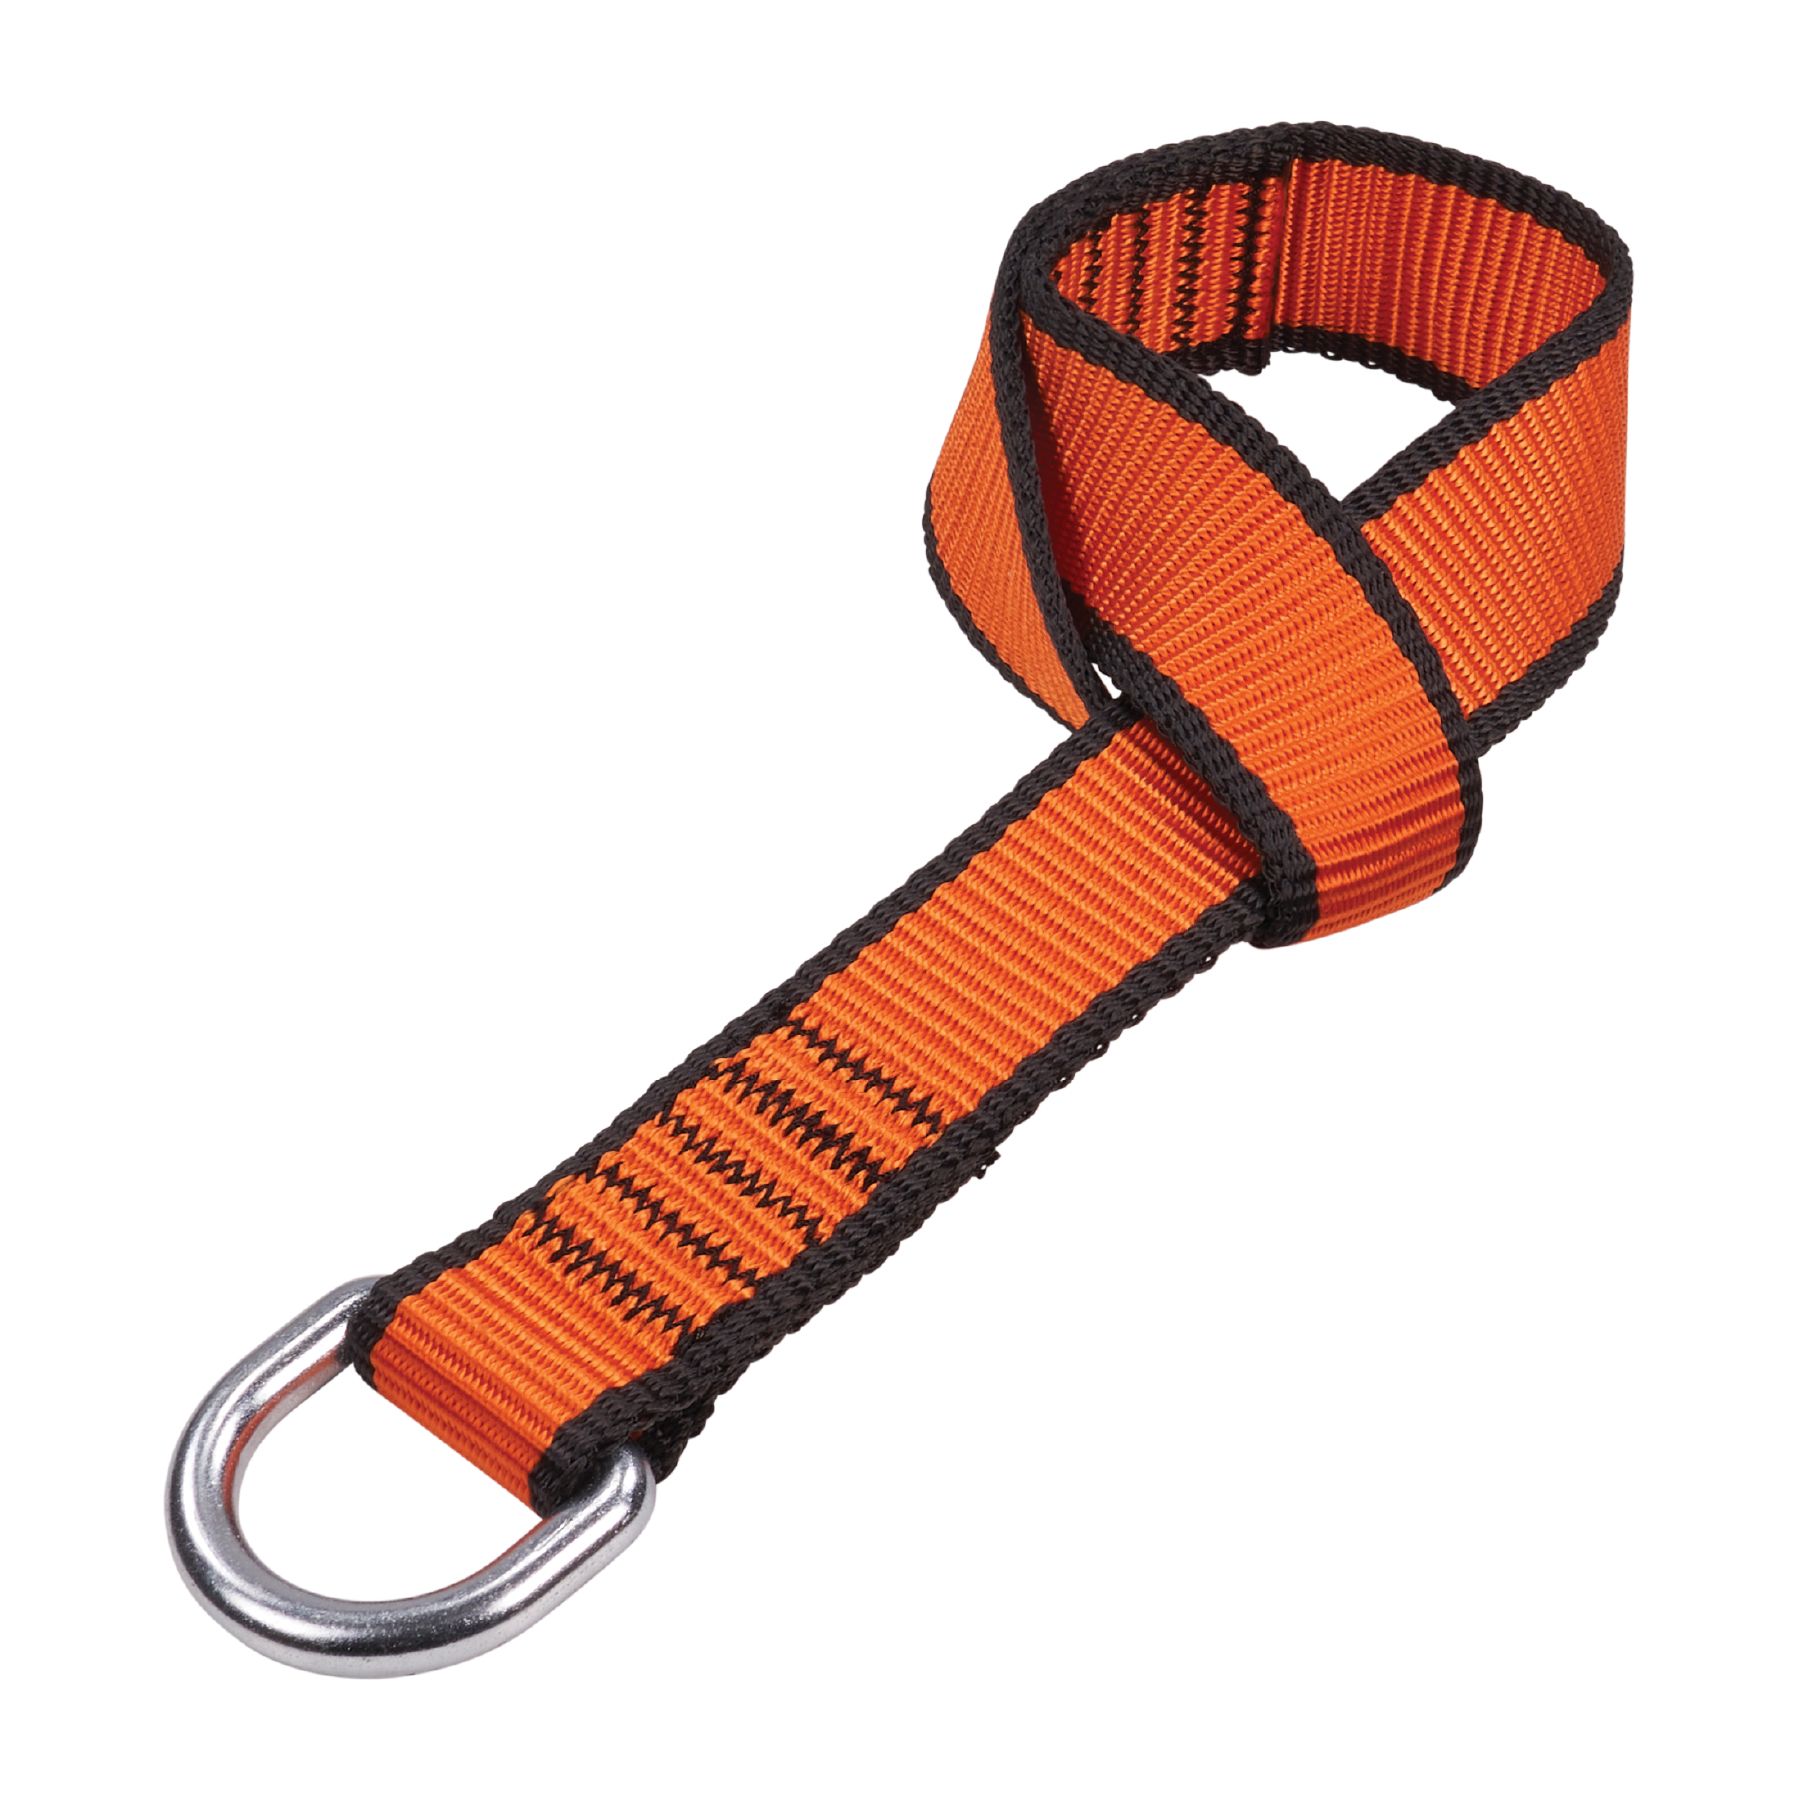 https://www.ergodyne.com/sites/default/files/product-images/3174-anchor-choke-strap-for-tool-tethering-orange-front.jpg